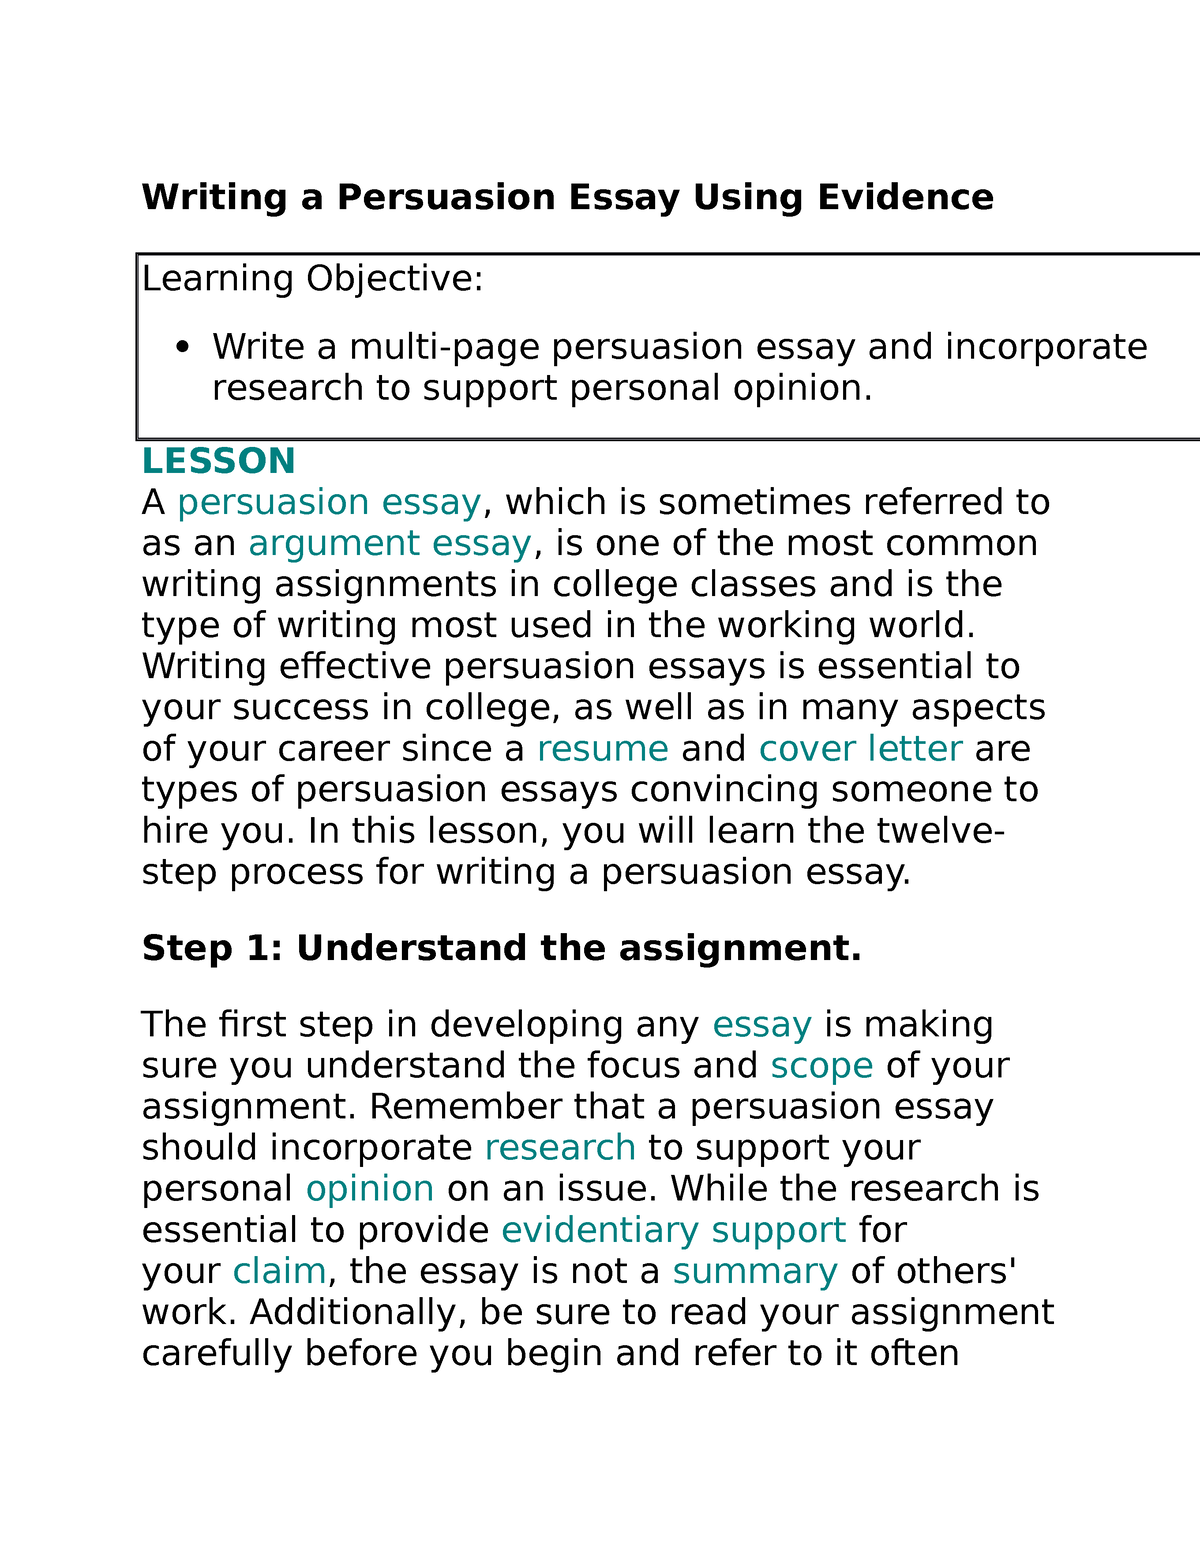 Writting a perssuasive essay - Writing a Persuasion Essay Using ...